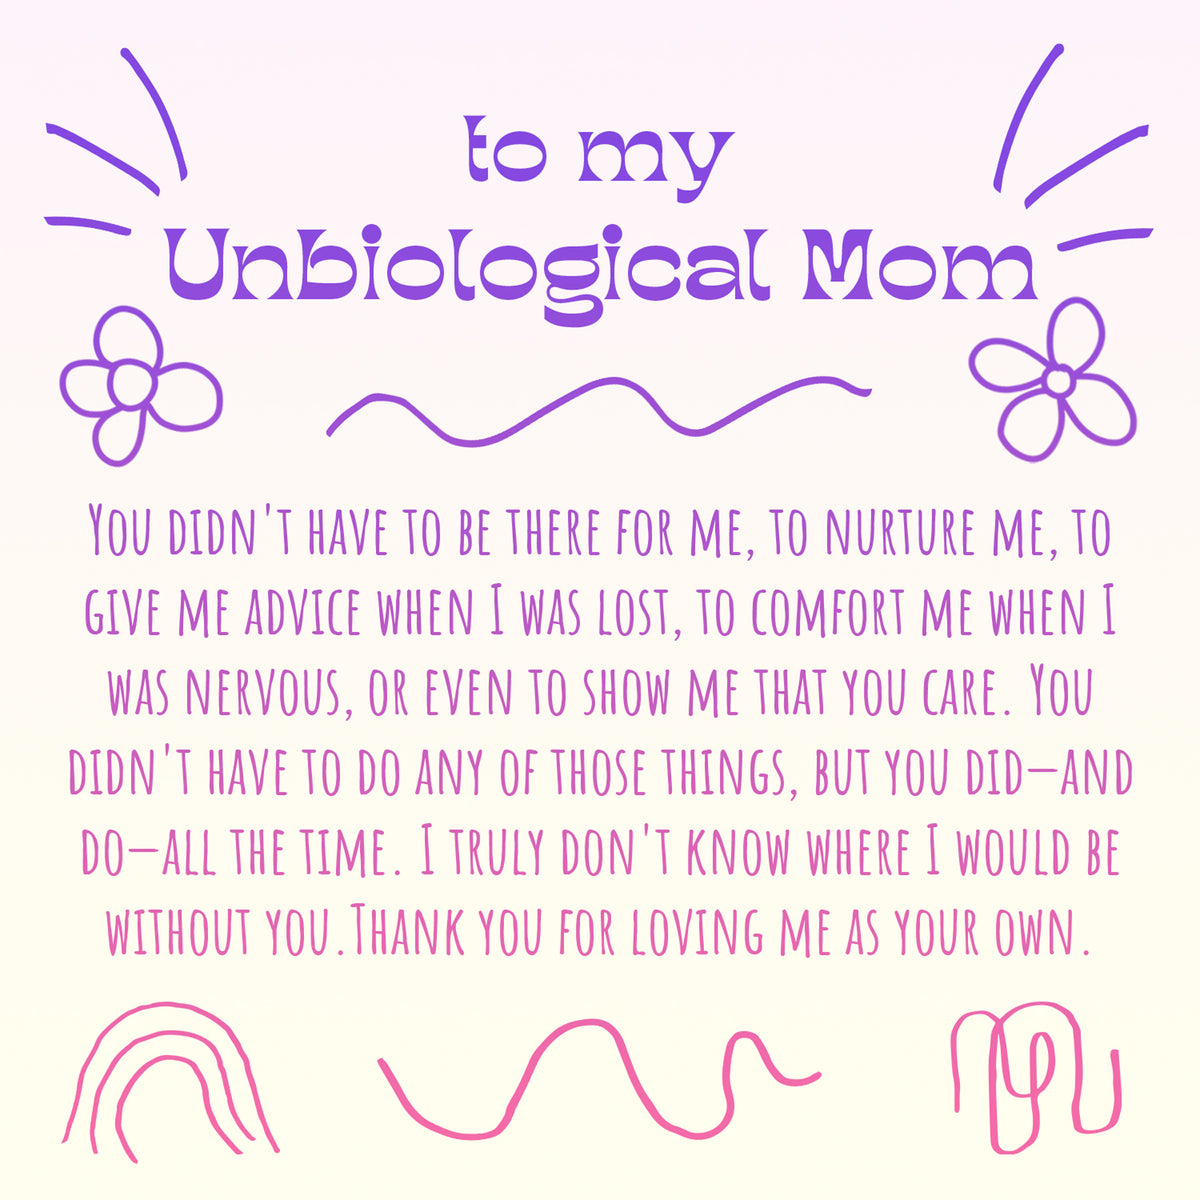 Unbiological Mom  Gift Box Set